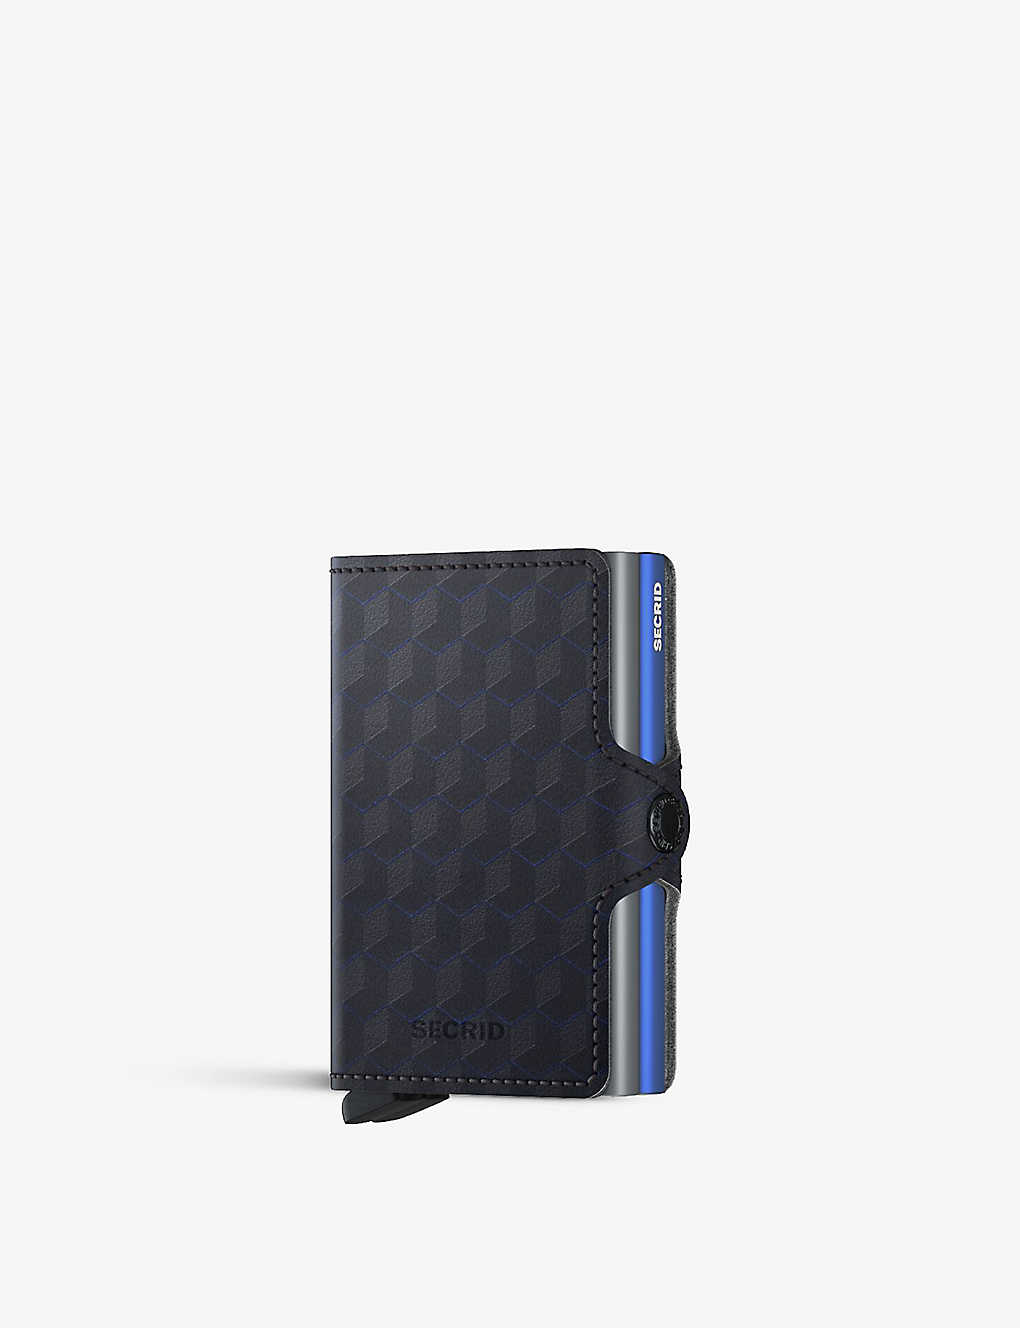 Secrid Top-titanium-blue Twinwallet Leather And Aluminium Card Holder